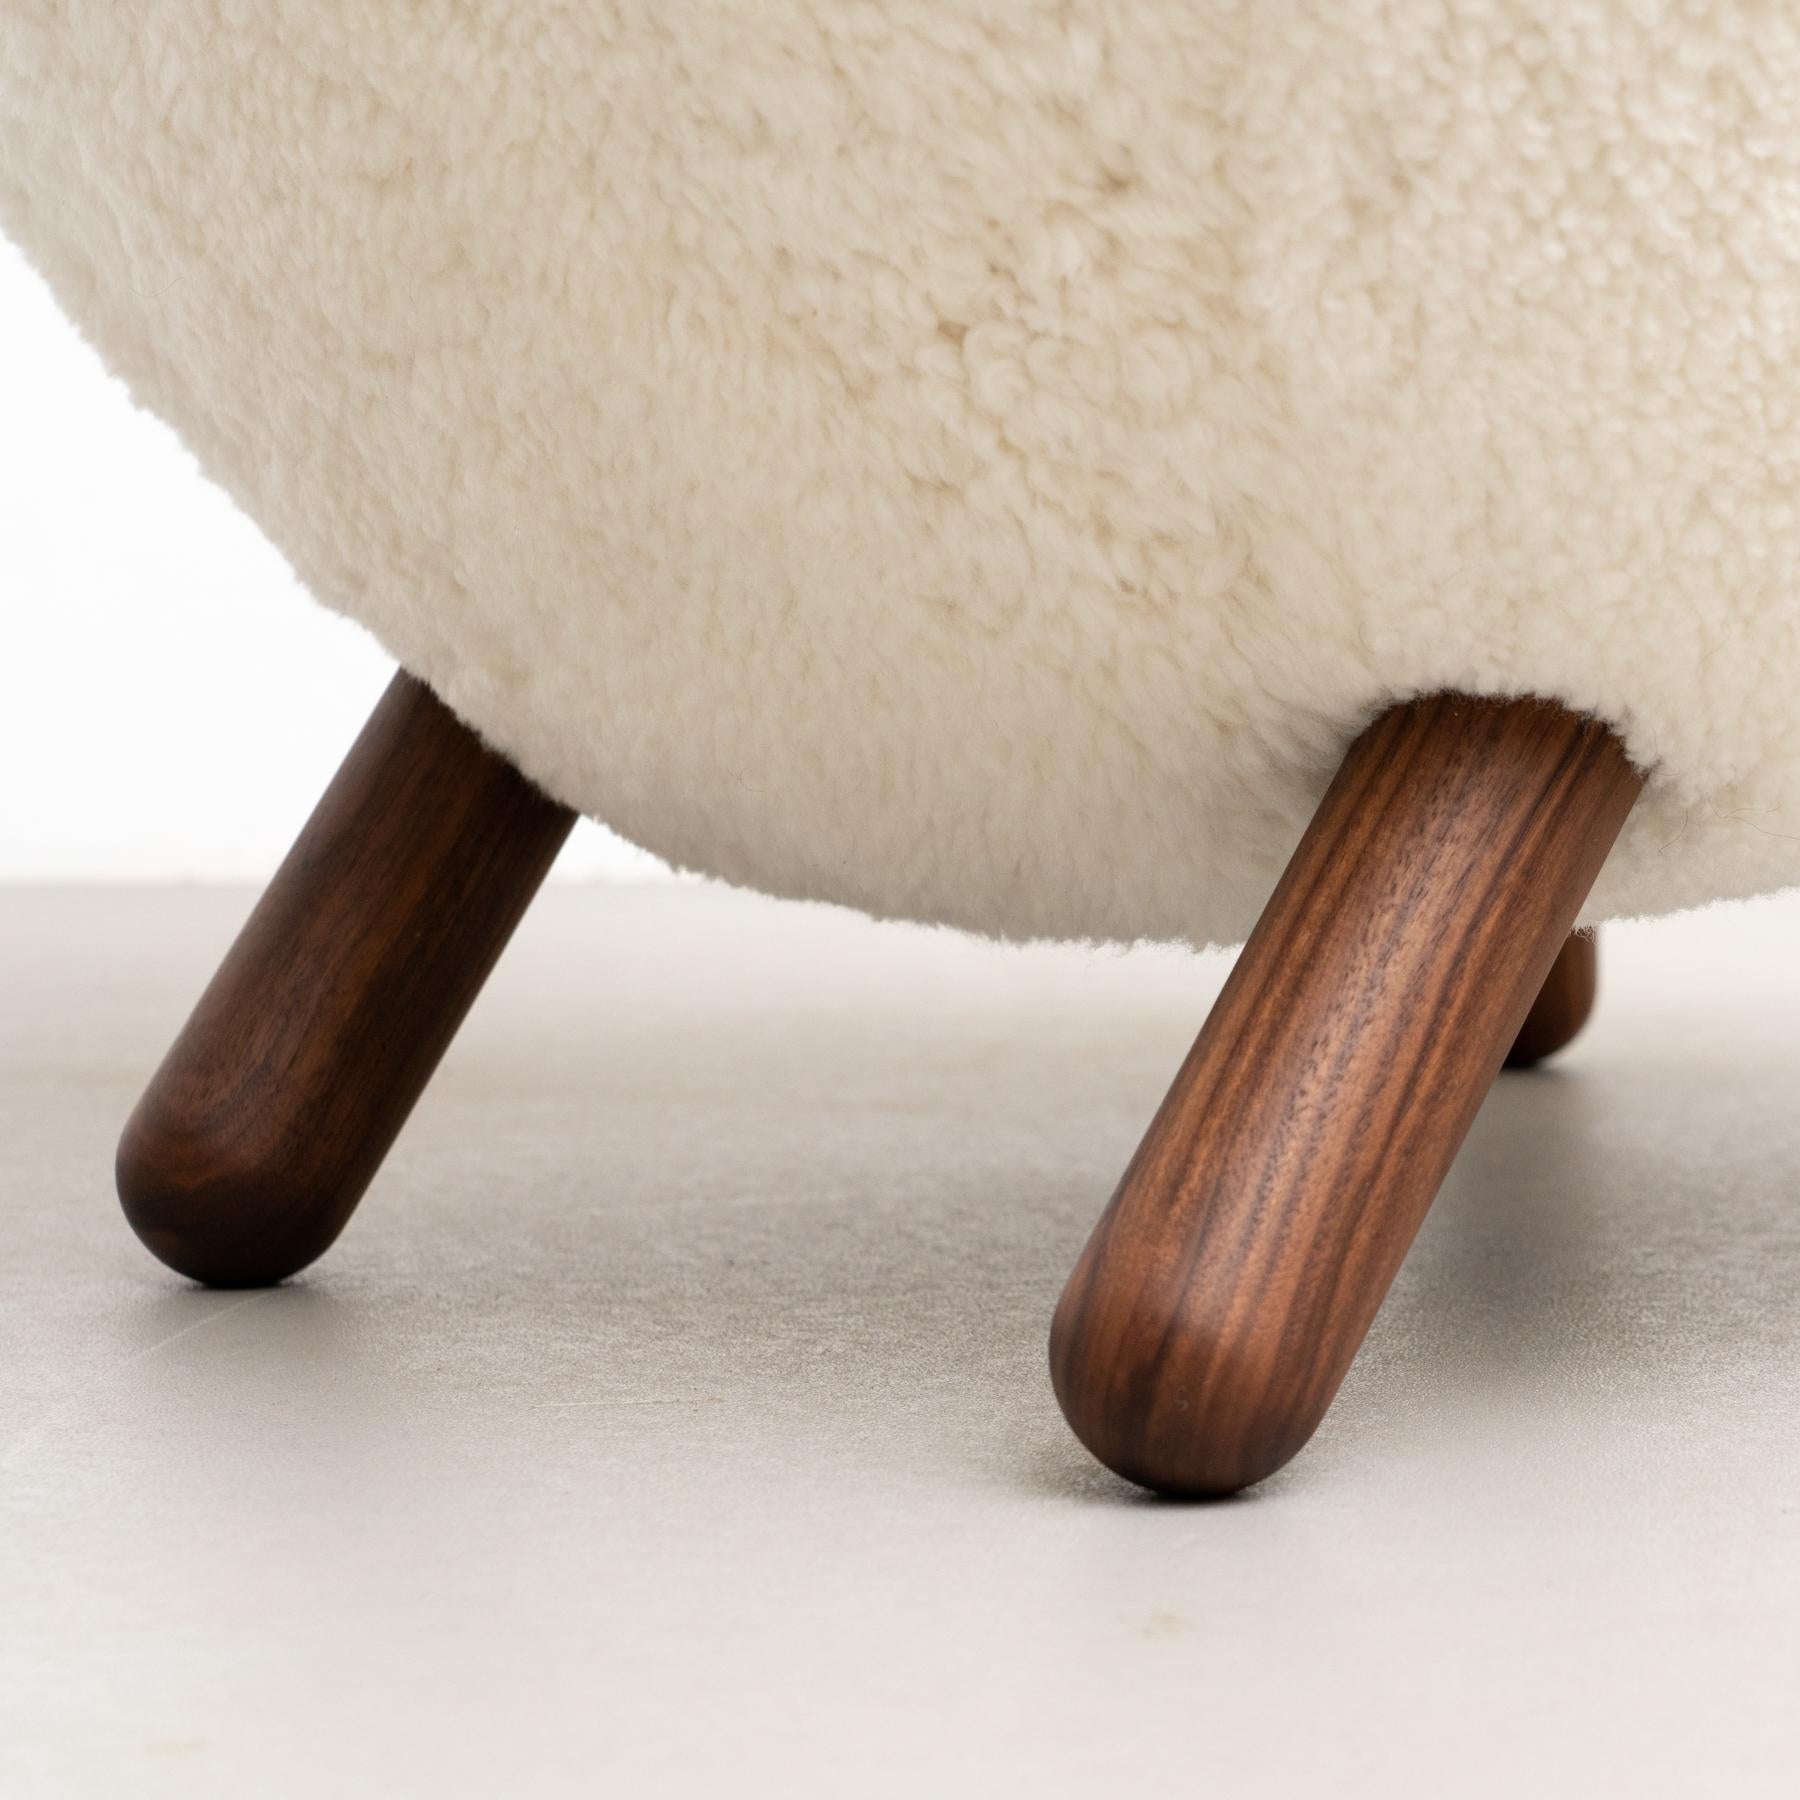 Finn Juhl Pelican Chair Upholstered in Offwhite Sheepskin In New Condition For Sale In Barcelona, Barcelona